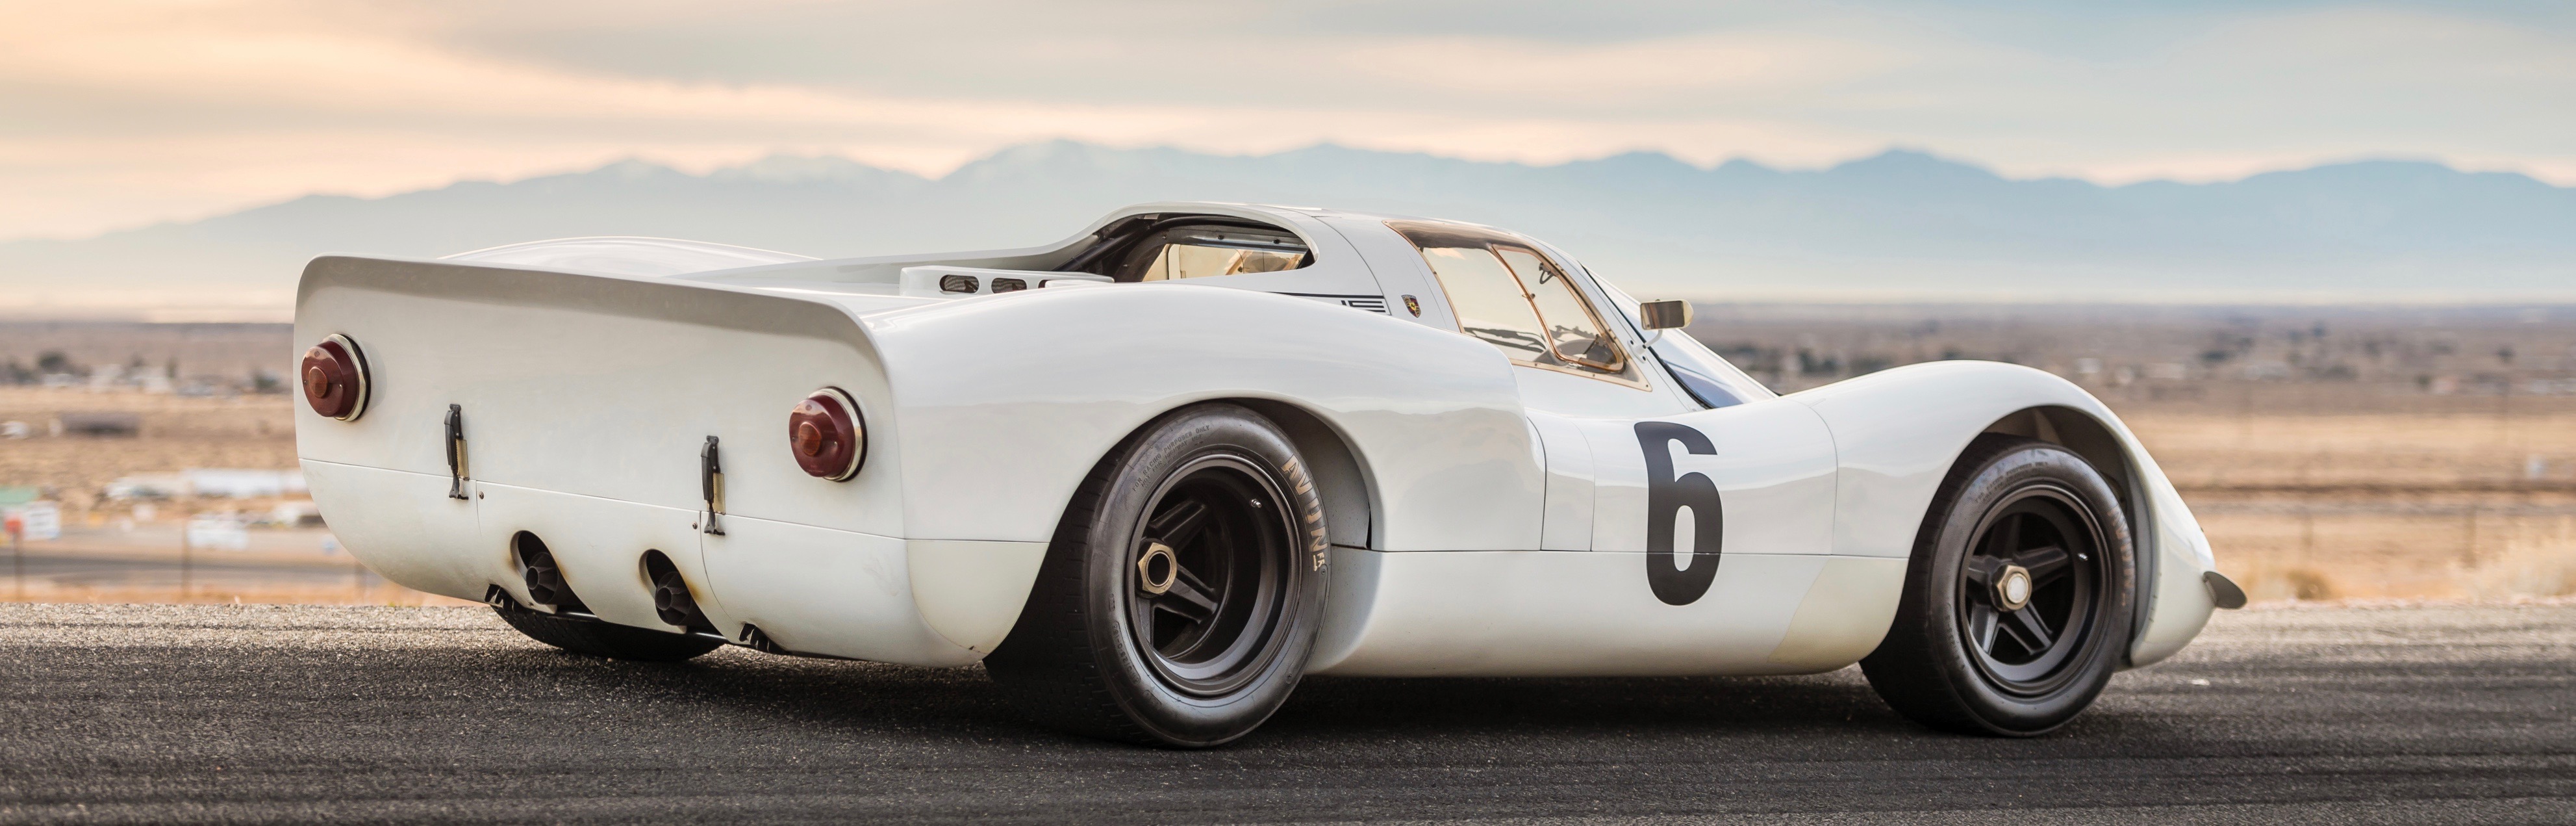 Historic Porsche factory racer joins RM Sotheby’s Monterey sale docket